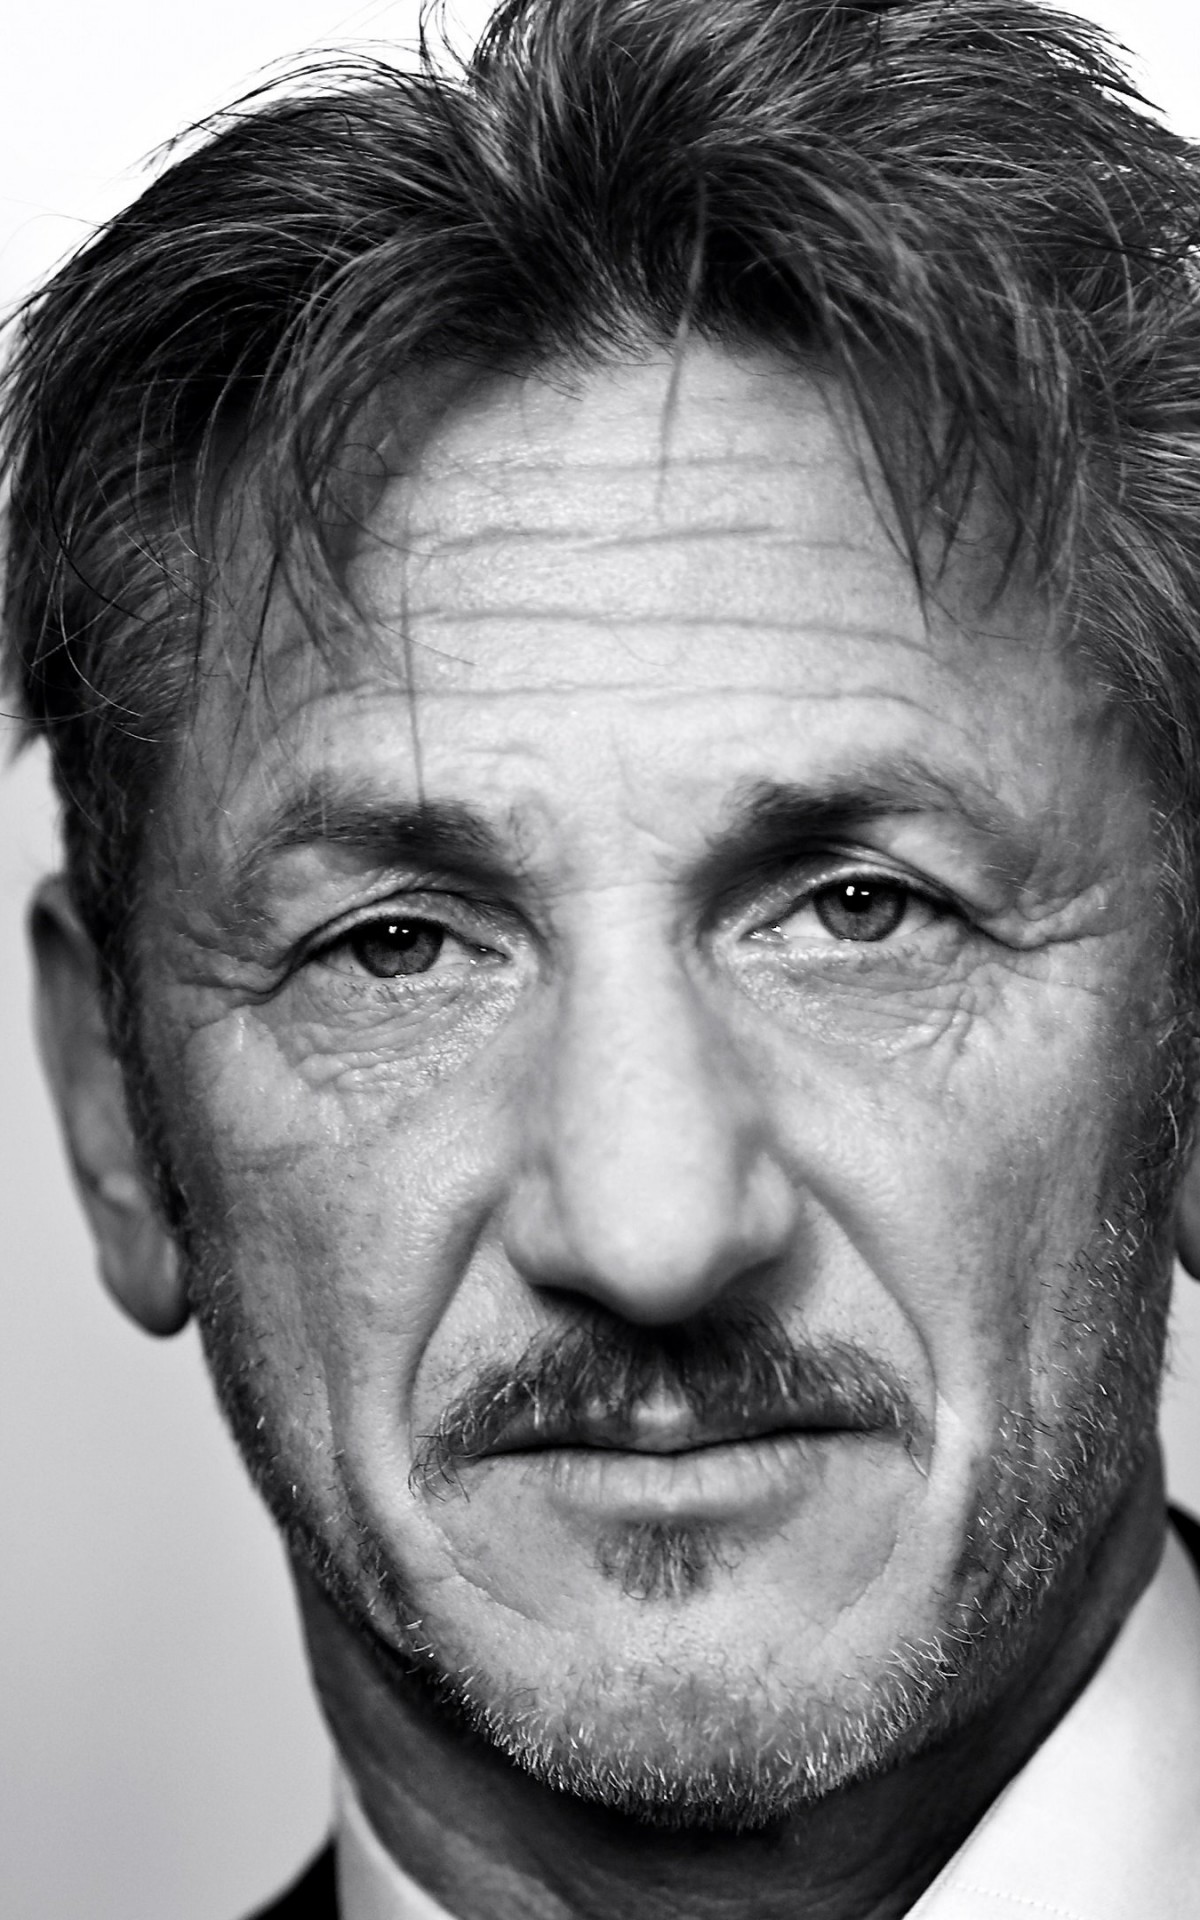 Sean Penn Portrait in Black & White Wallpaper for Amazon Kindle Fire HDX